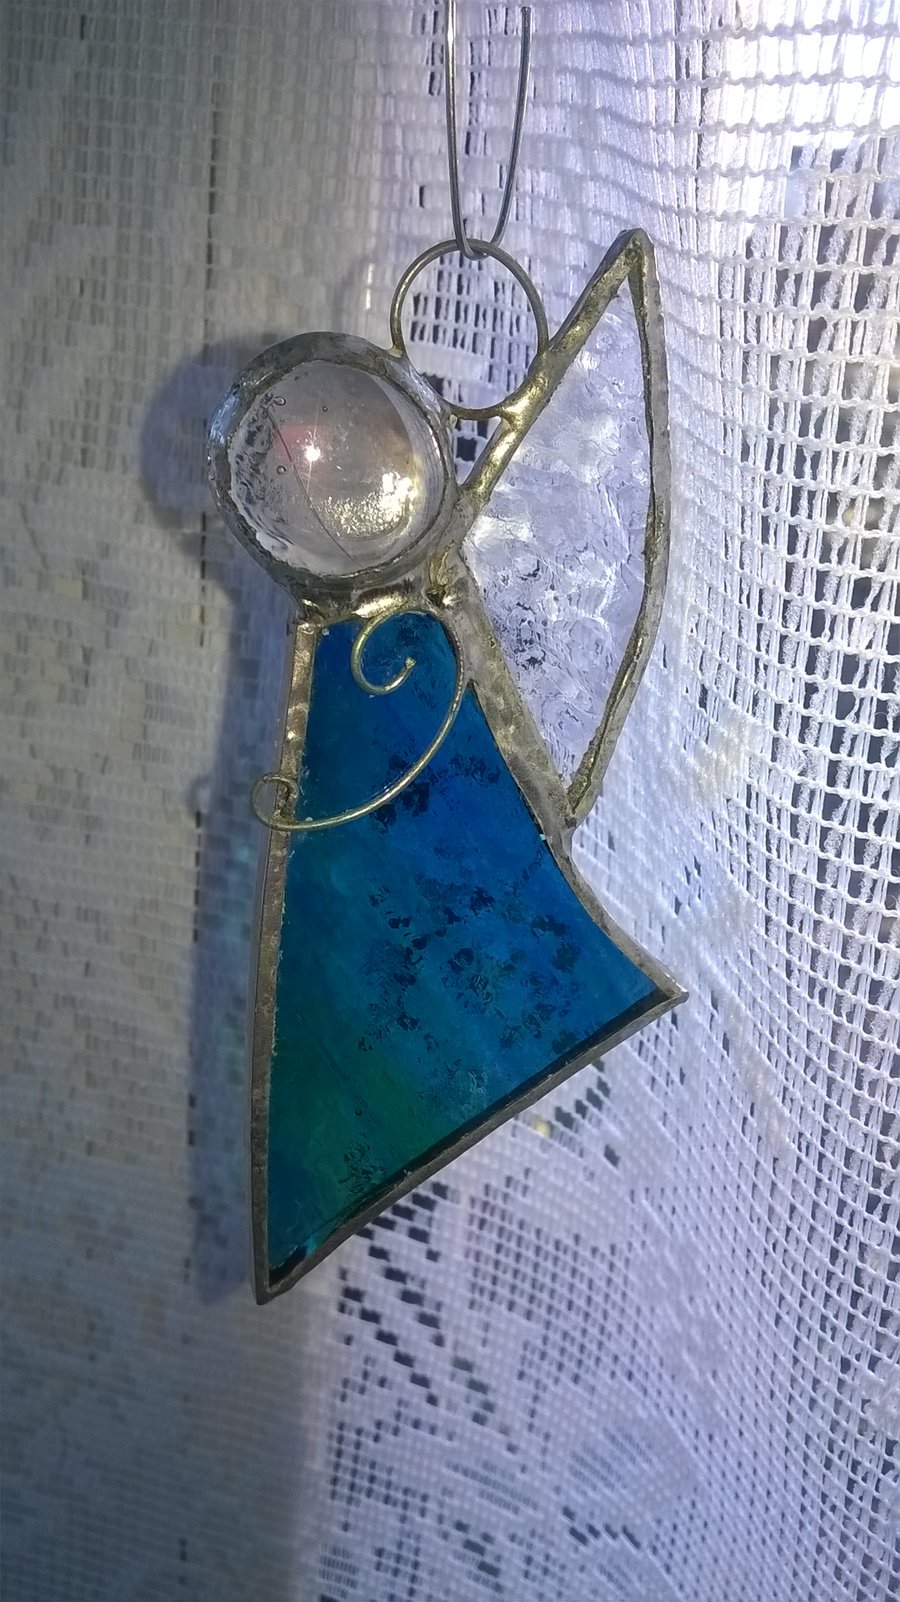 Glass angel suncatcher, ornament or Christmas  decoration - deep turquoise blue